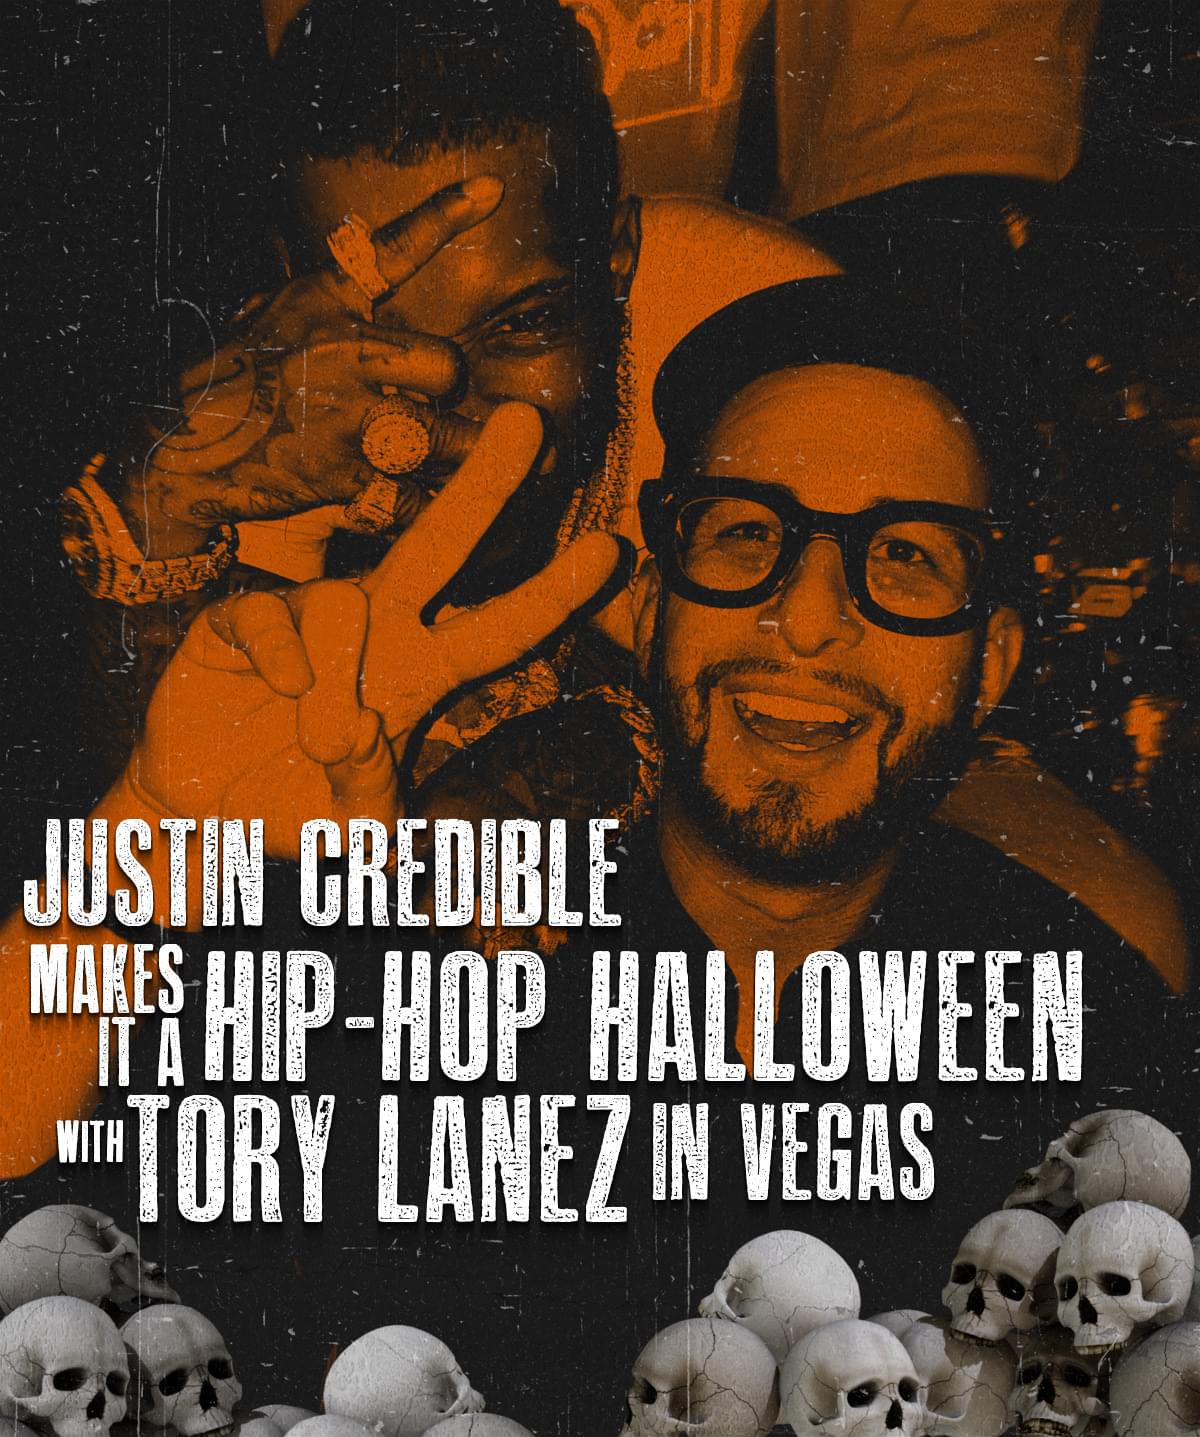 Justin Credible Makes It a Hip Hop Halloween w/ Tory Lanez [WATCH]